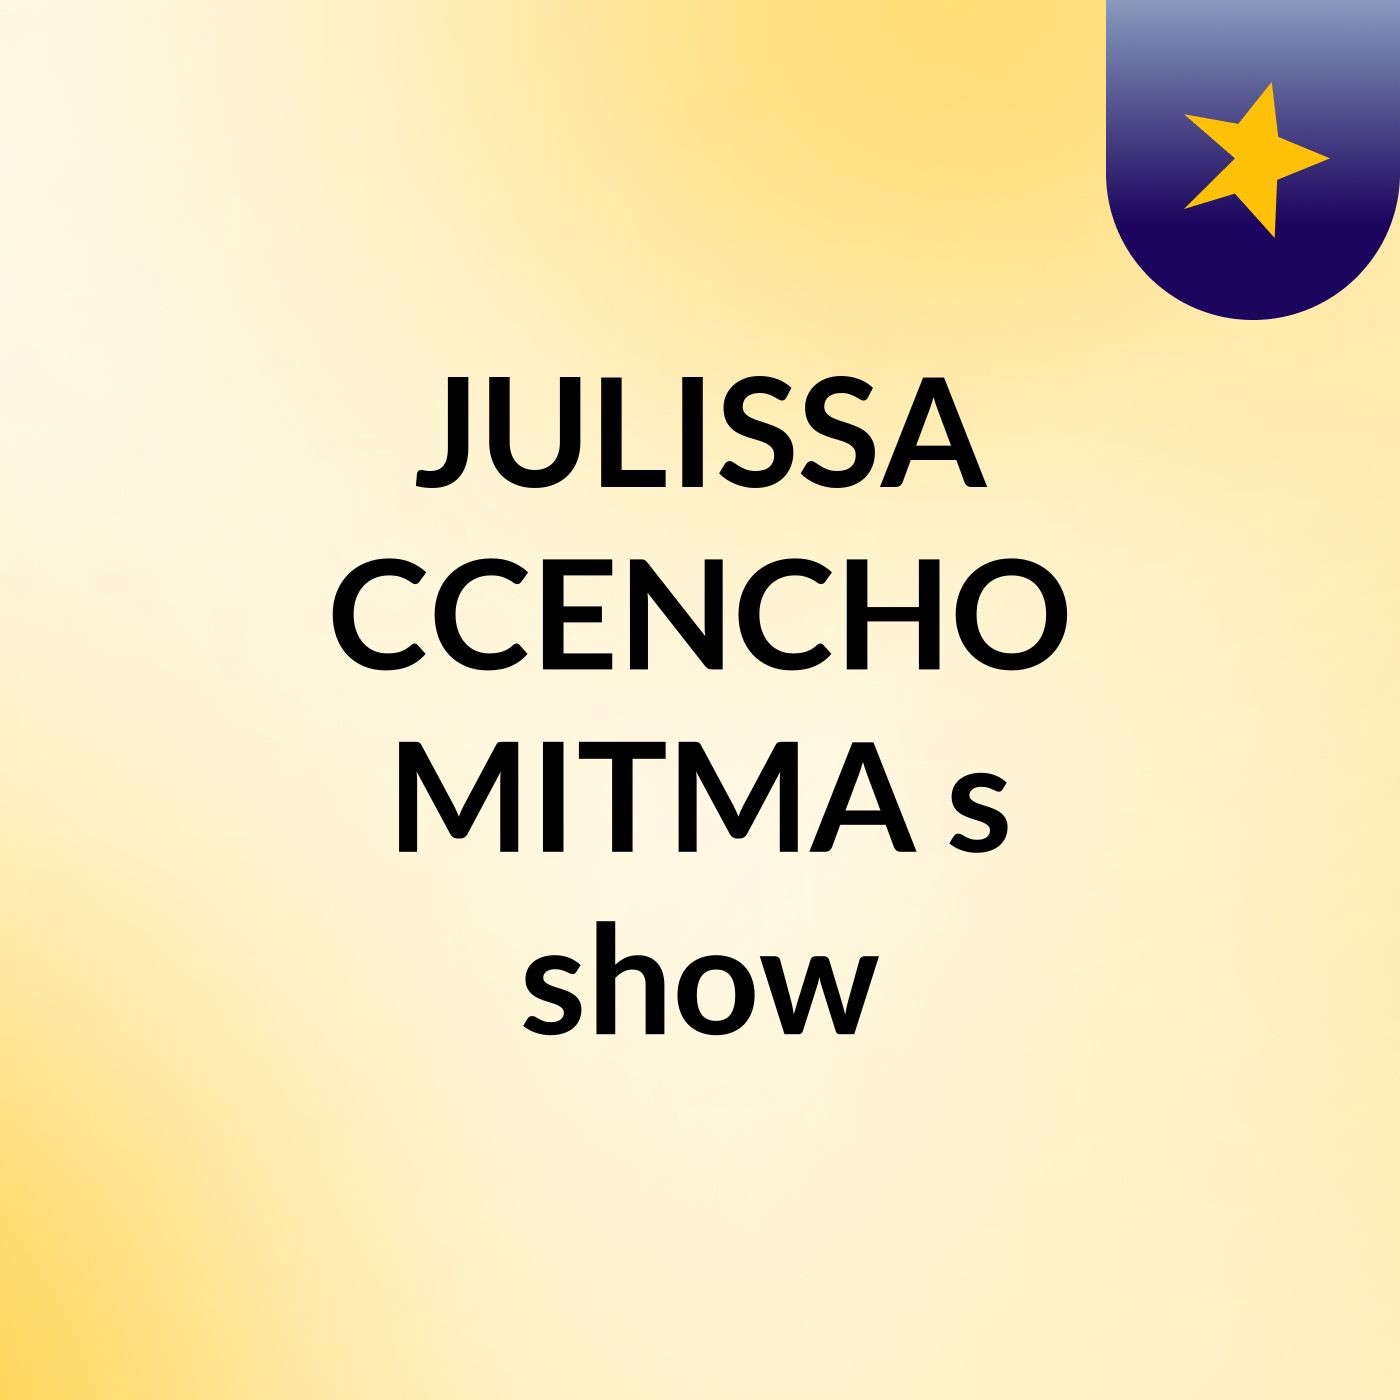 JULISSA CCENCHO MITMA's show